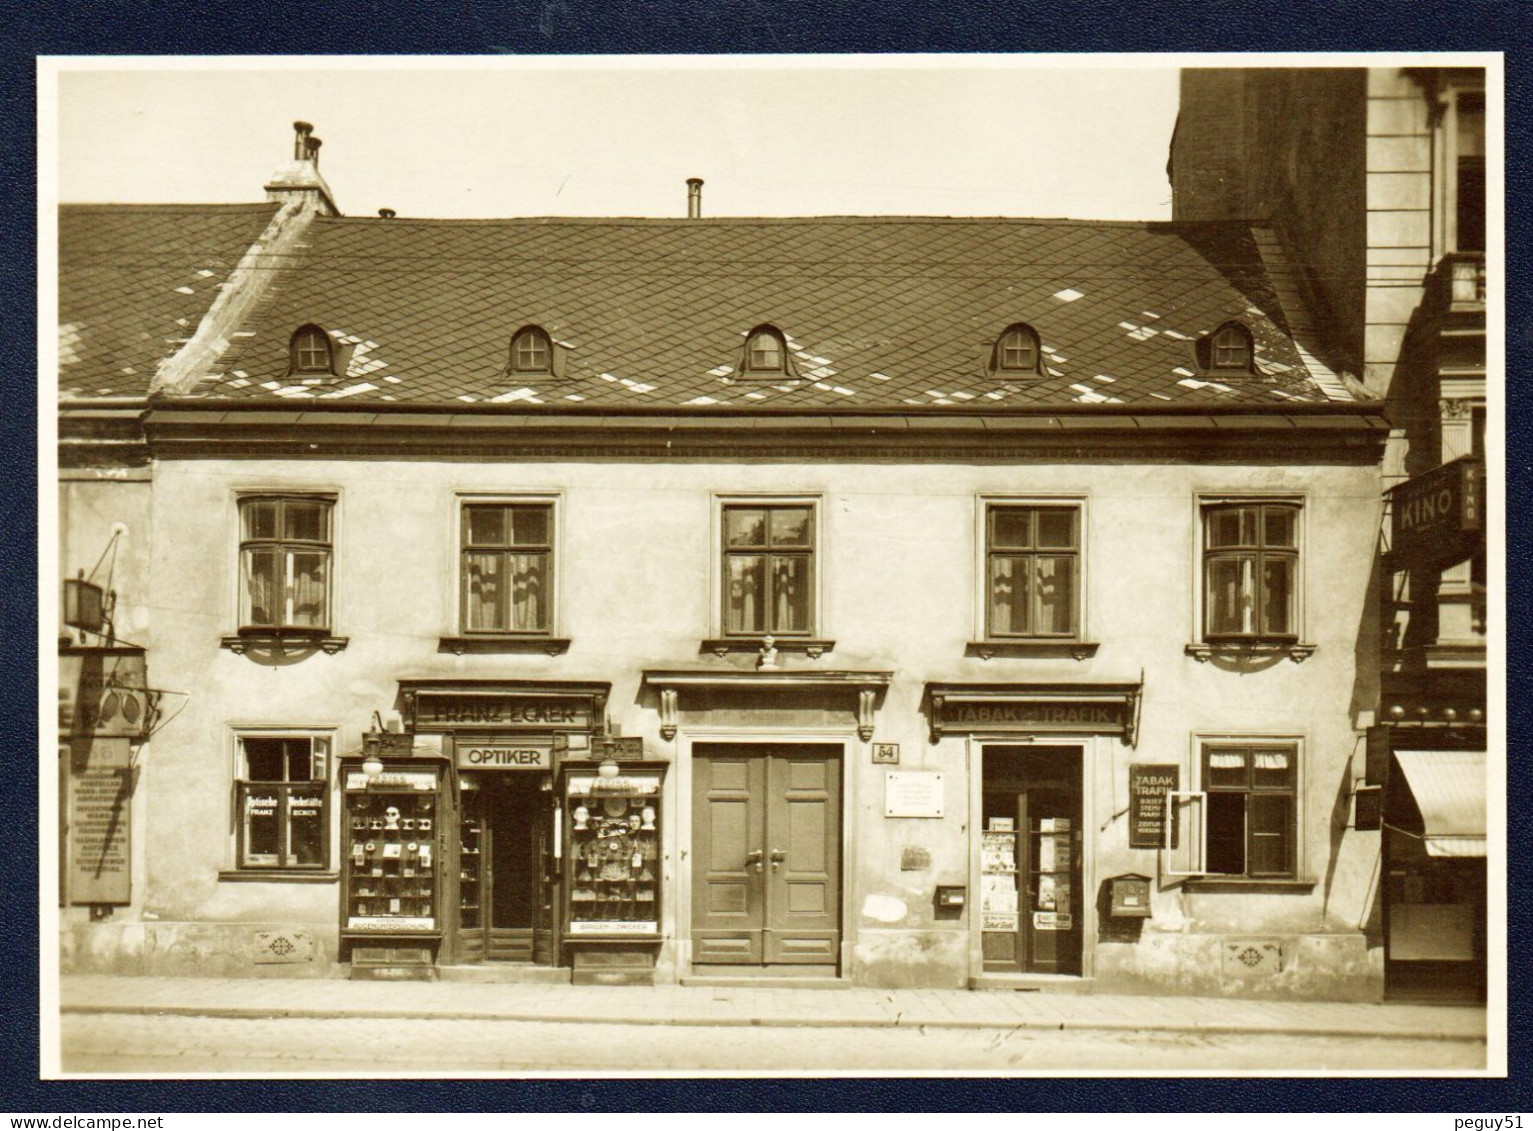 Vienne. Himmelpfortgrund (Wien IX). Maison Natale De Franz Schubert. Optiker Franz Ecker. Tabak-Trafik - Musées